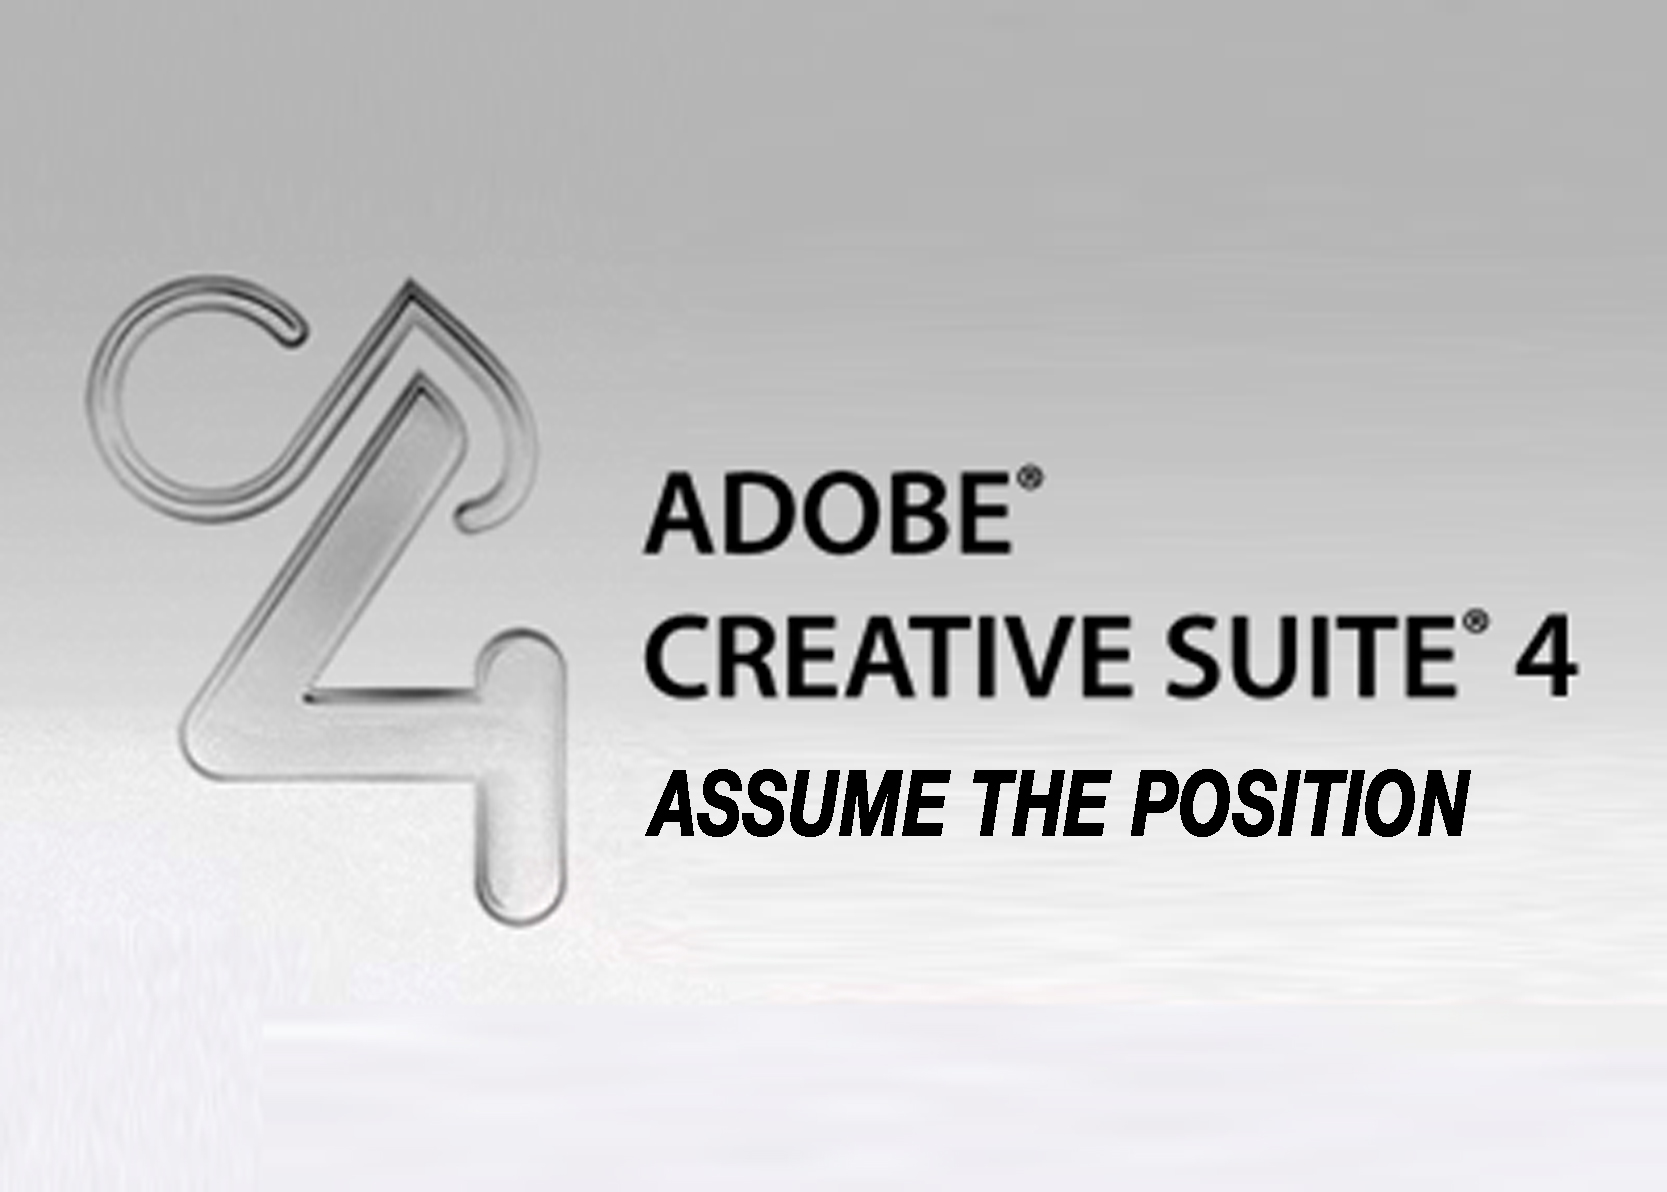 Adobe_Creative_Suite_4_logo.jpg